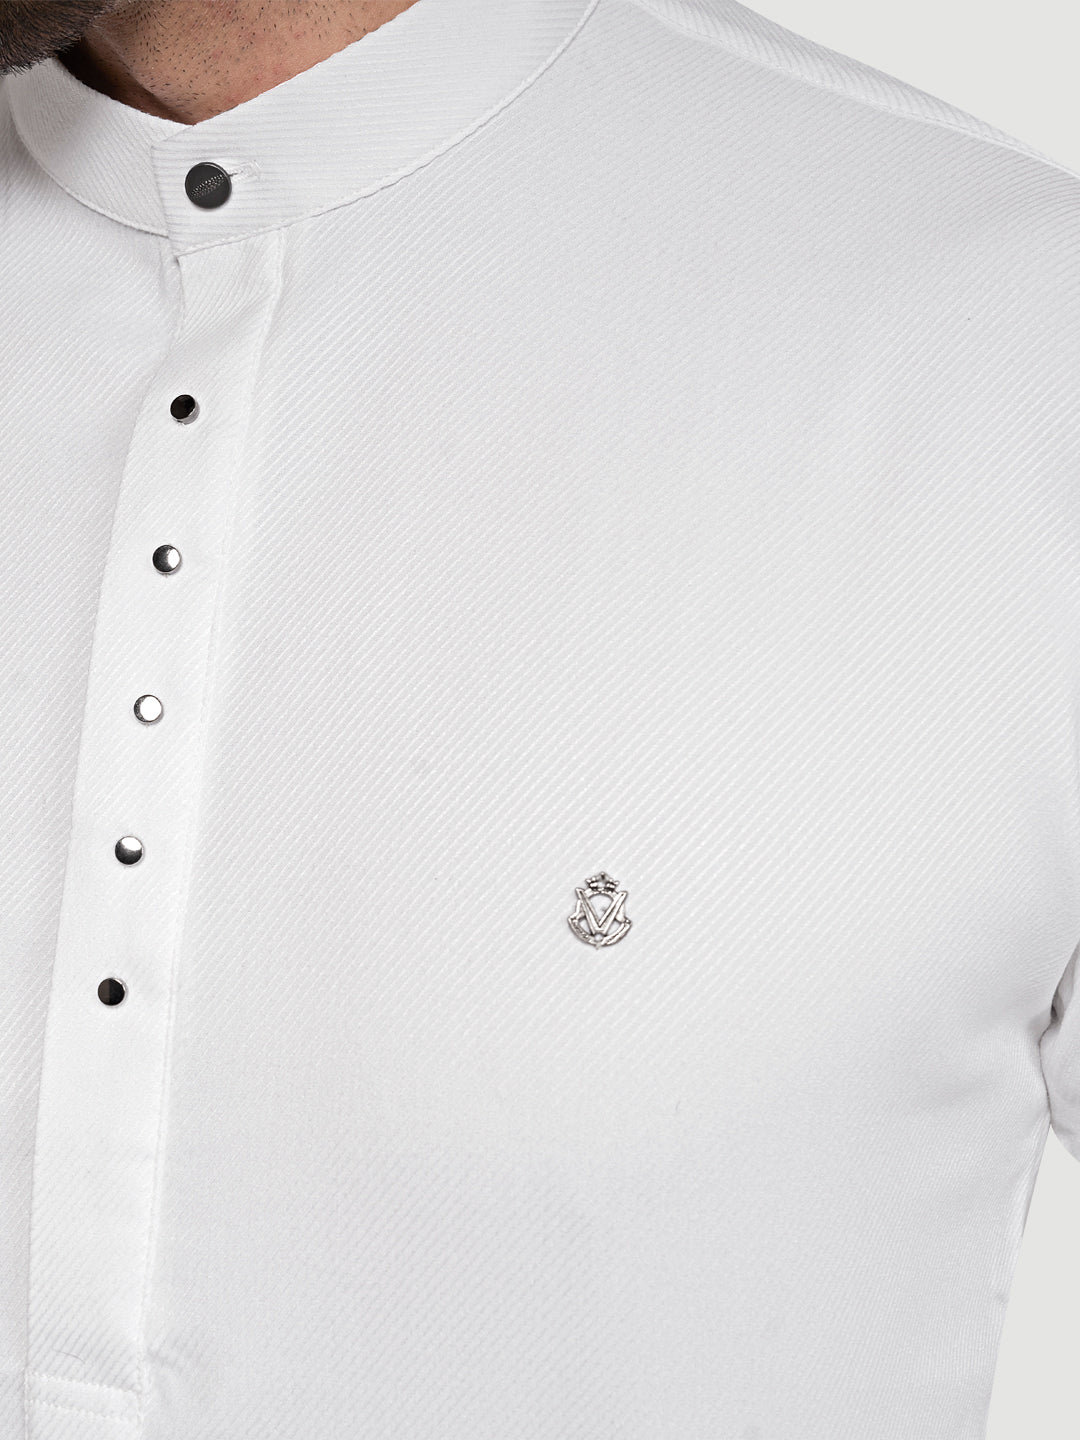 Black and White Men's Designer Short Kurta with Metal Buttons Bright White